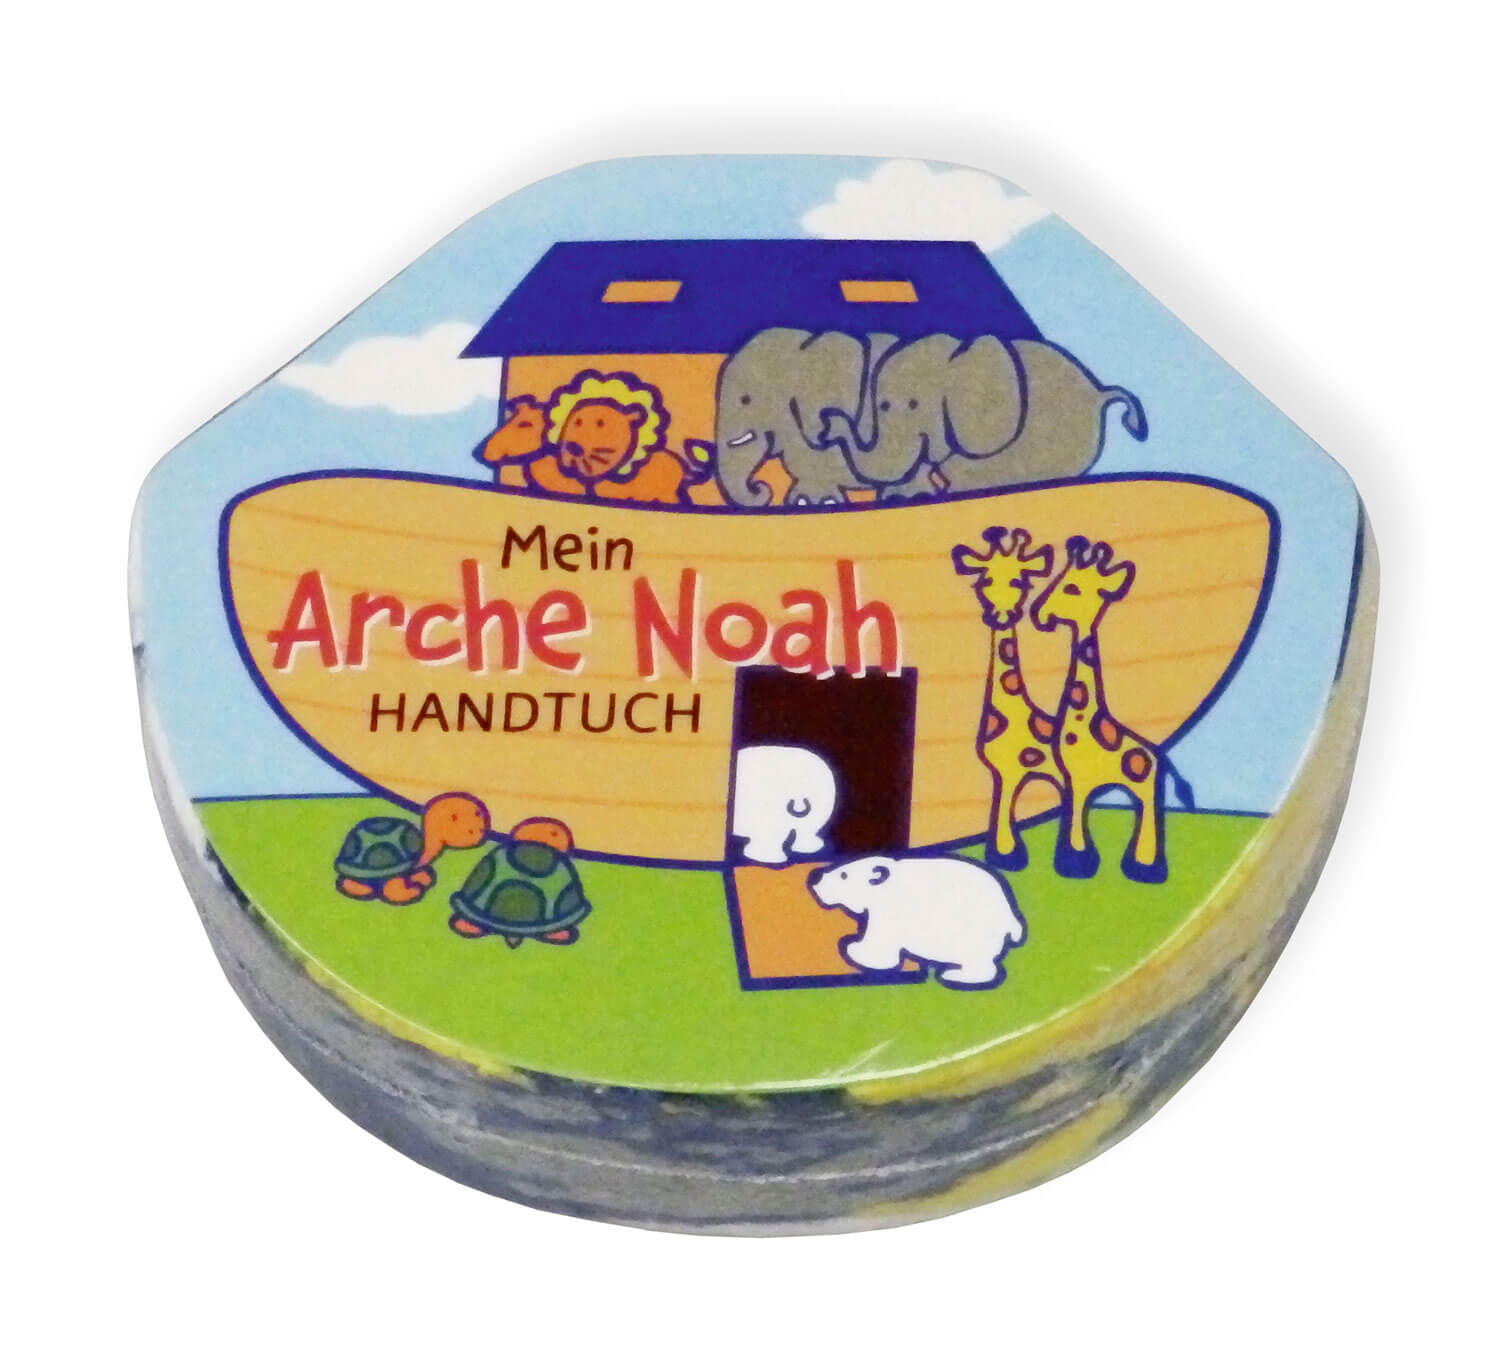 Handtuch Arche Noah